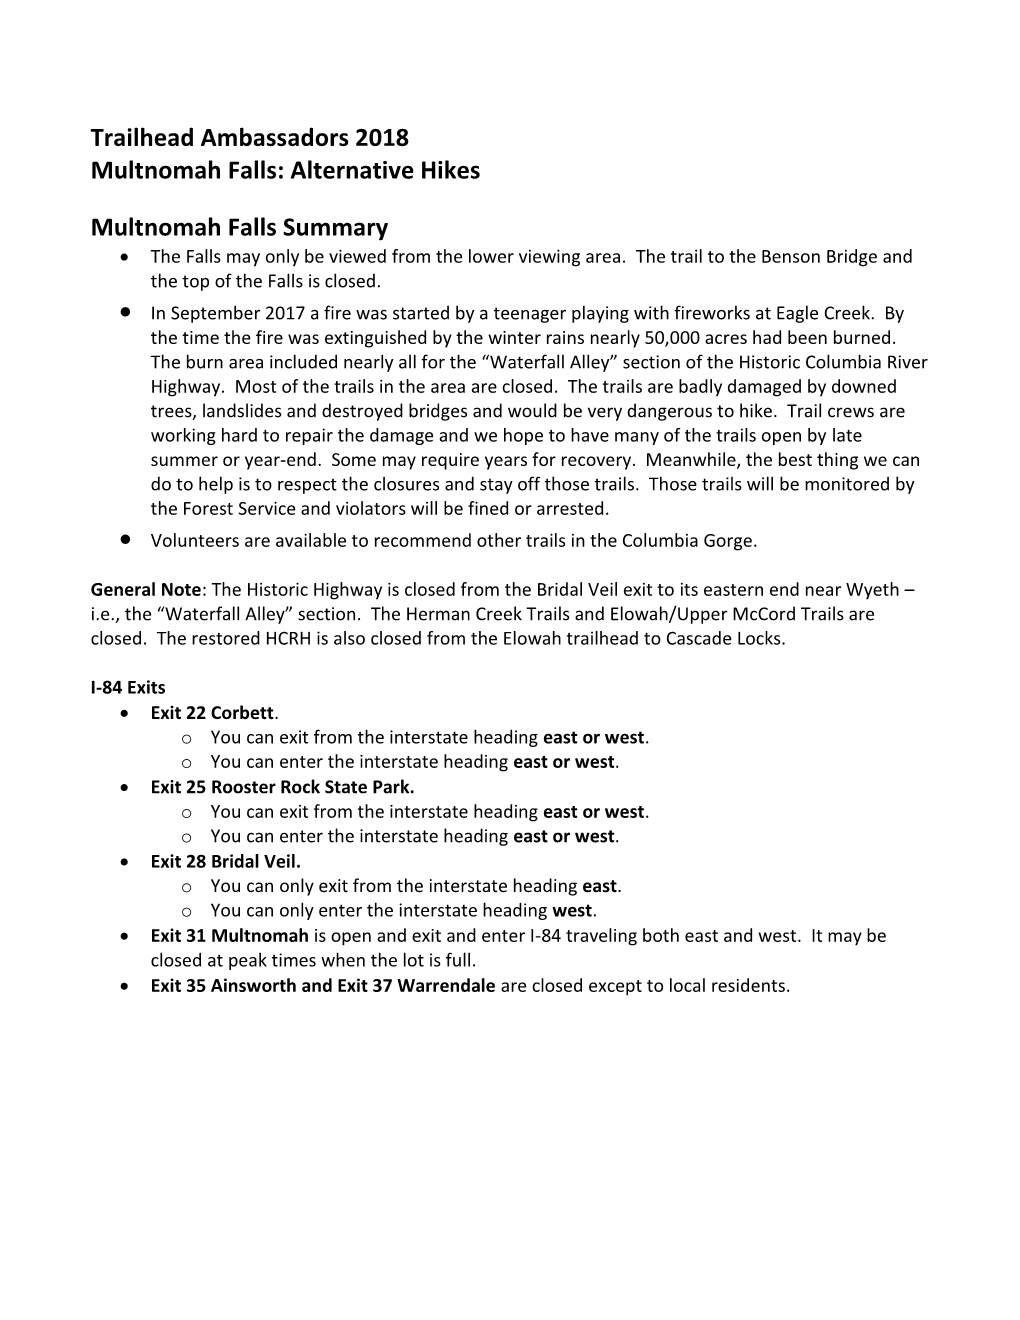 Alternative Hikes Multnomah Falls Summary